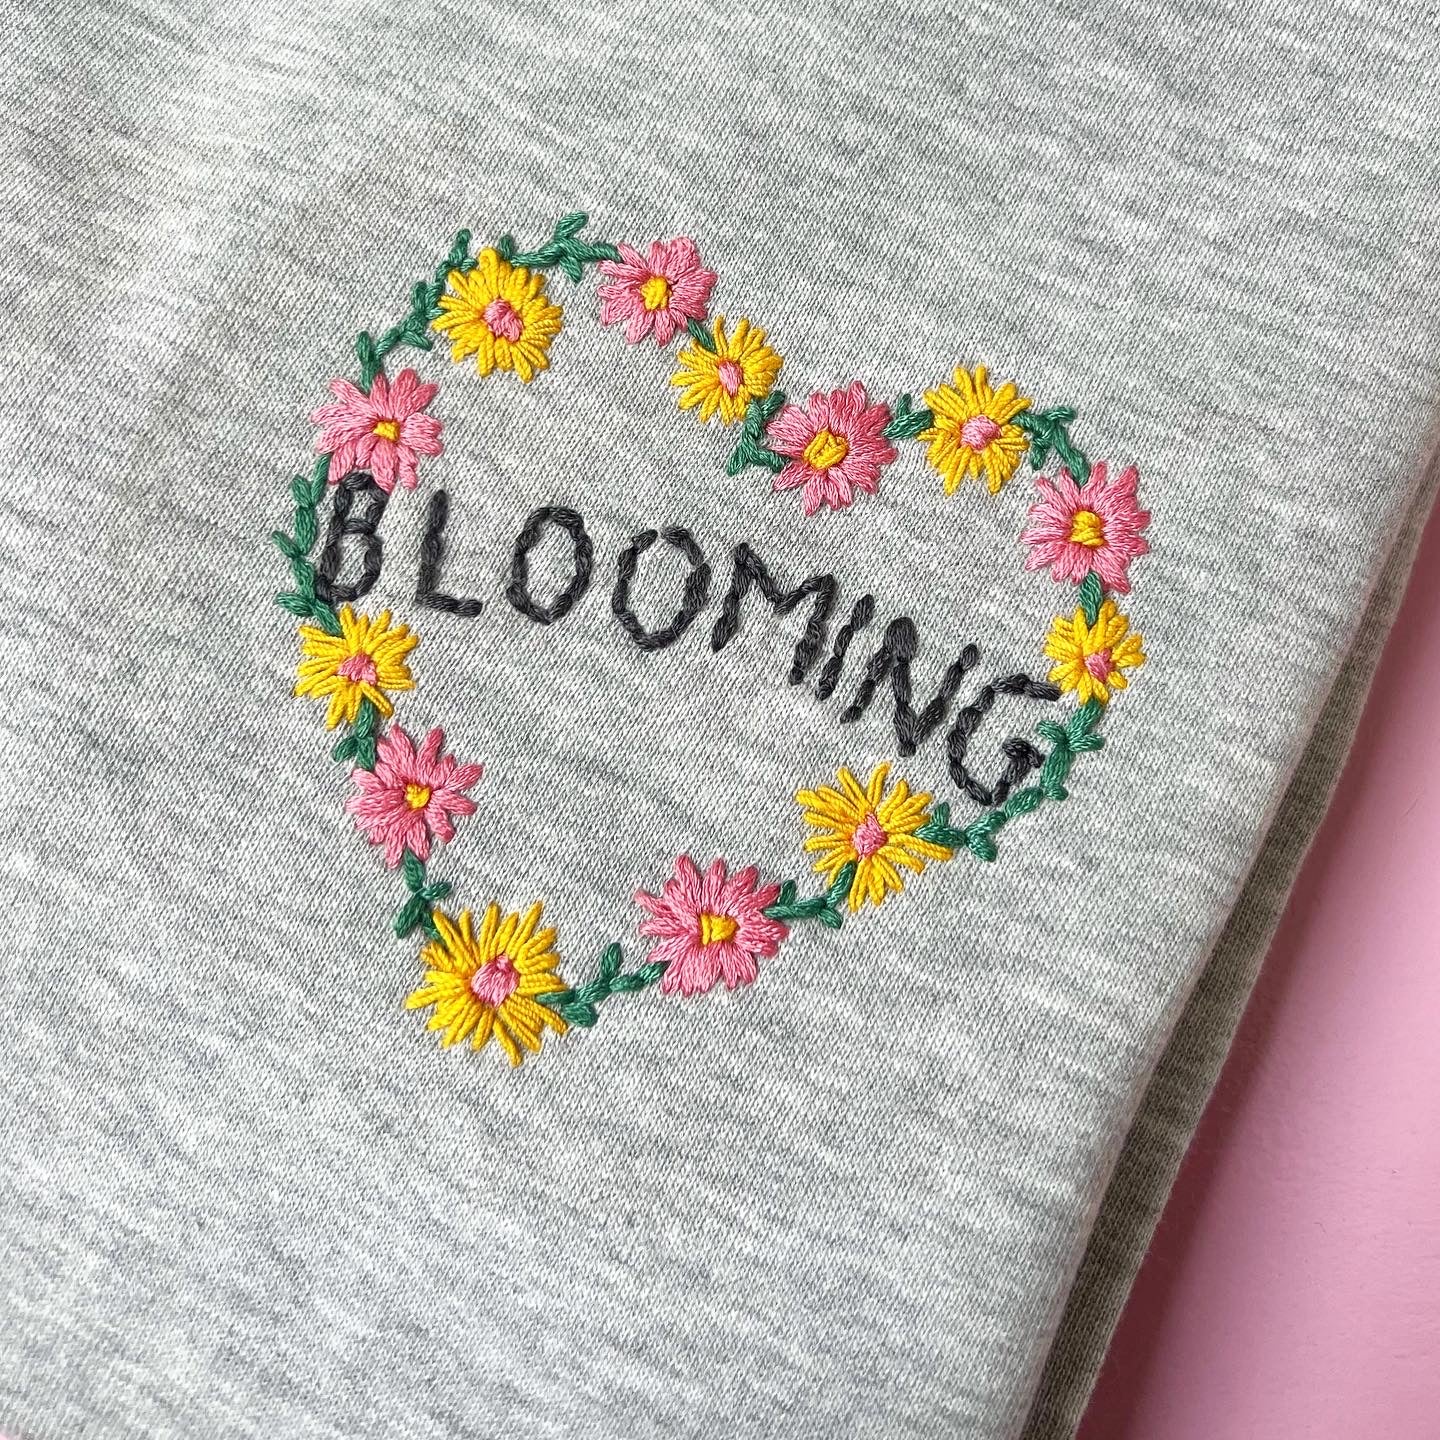 blooming hand-embroidered sweatshirt - grey